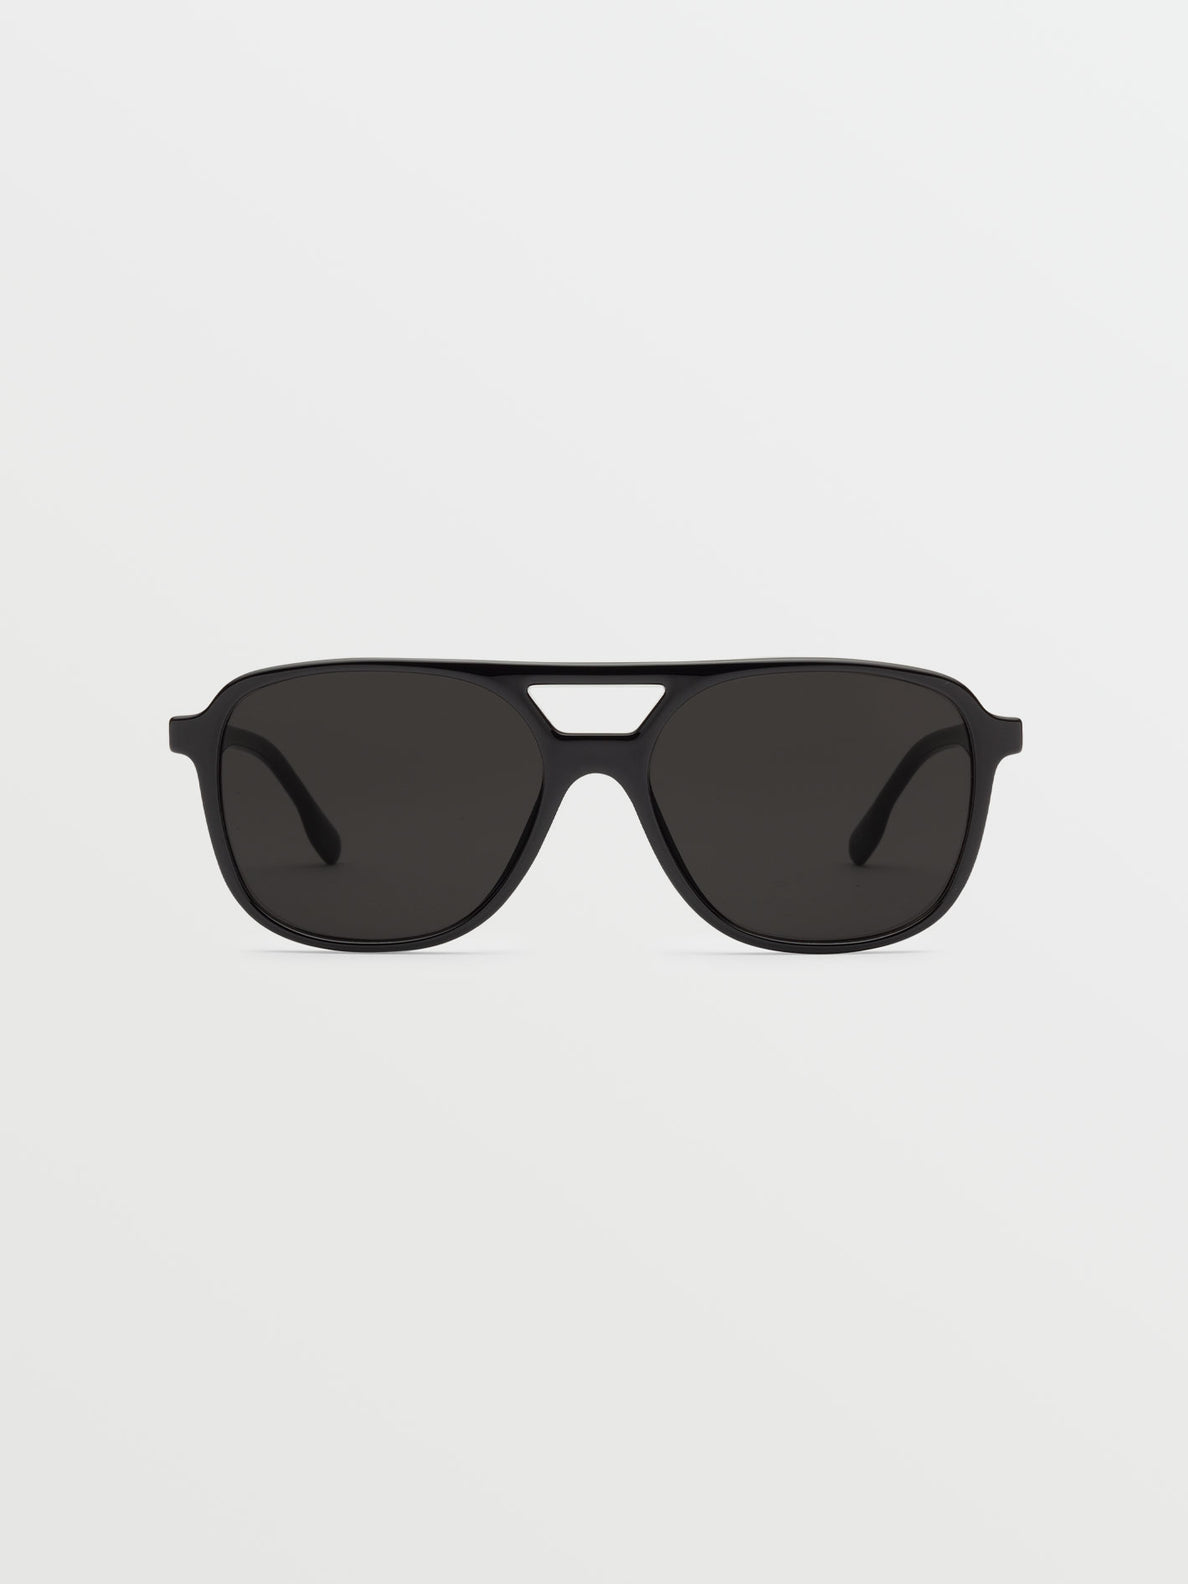 New Future Sunglasses - Gloss Black/Gray